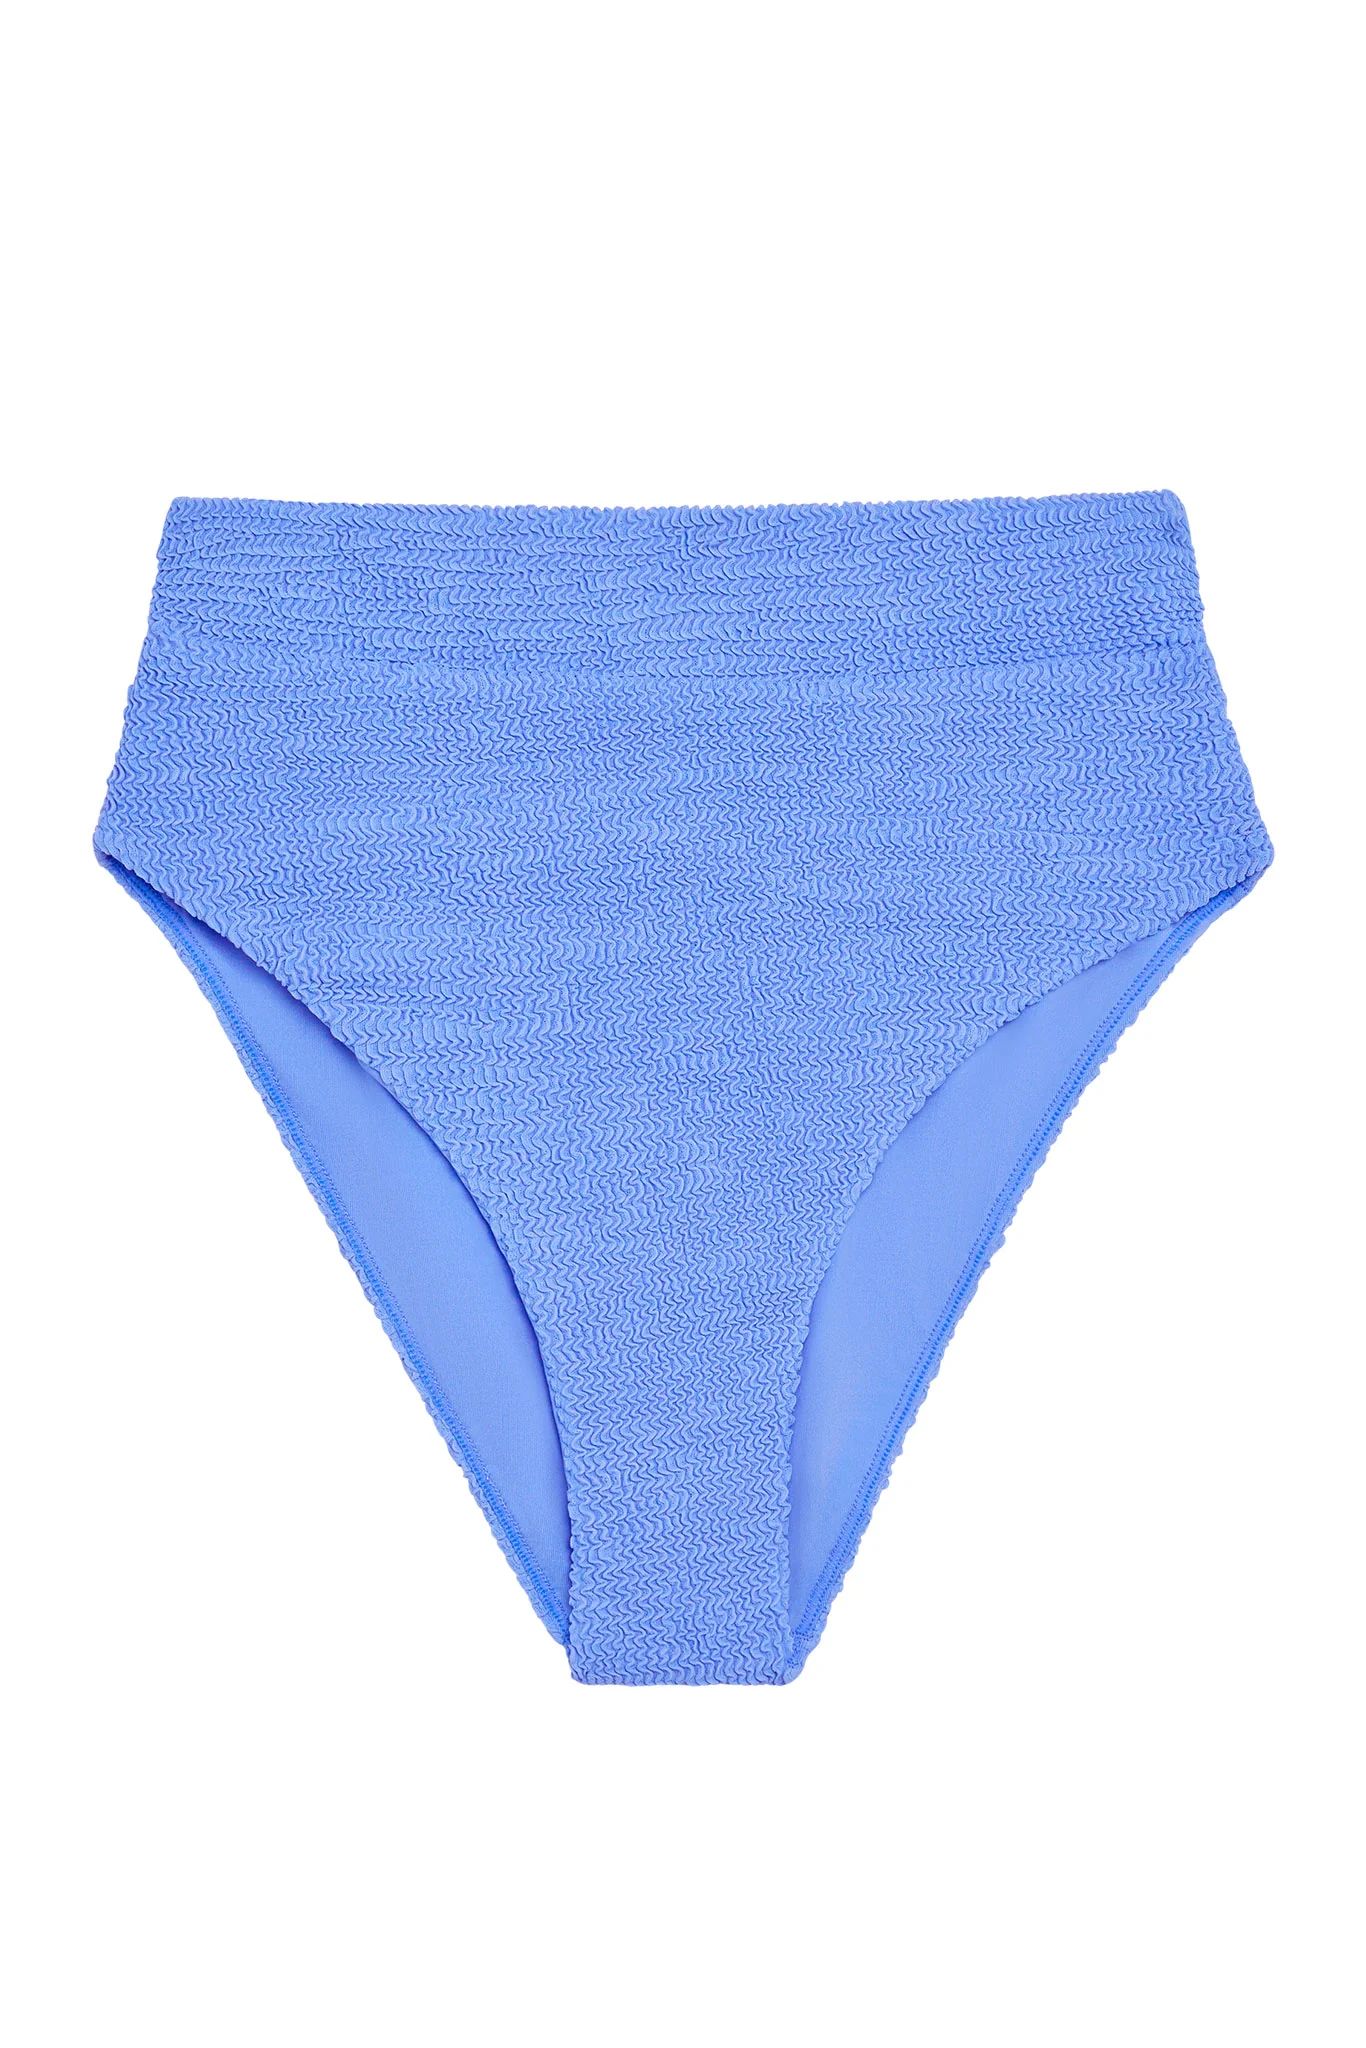 Sorrento Bottom - Pool Crinkle | Monday Swimwear